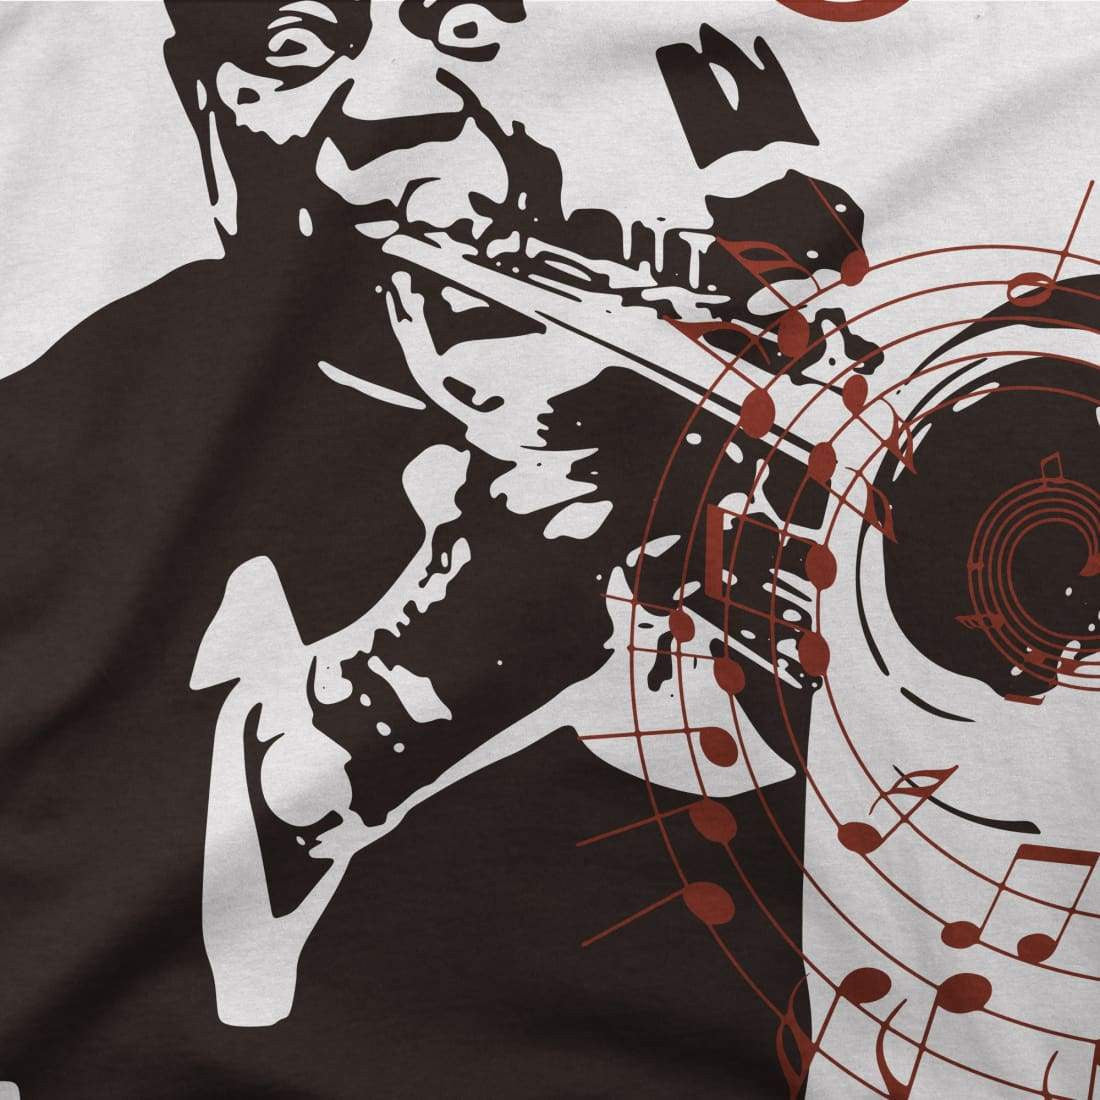 Louis Armstrong T-Shirt